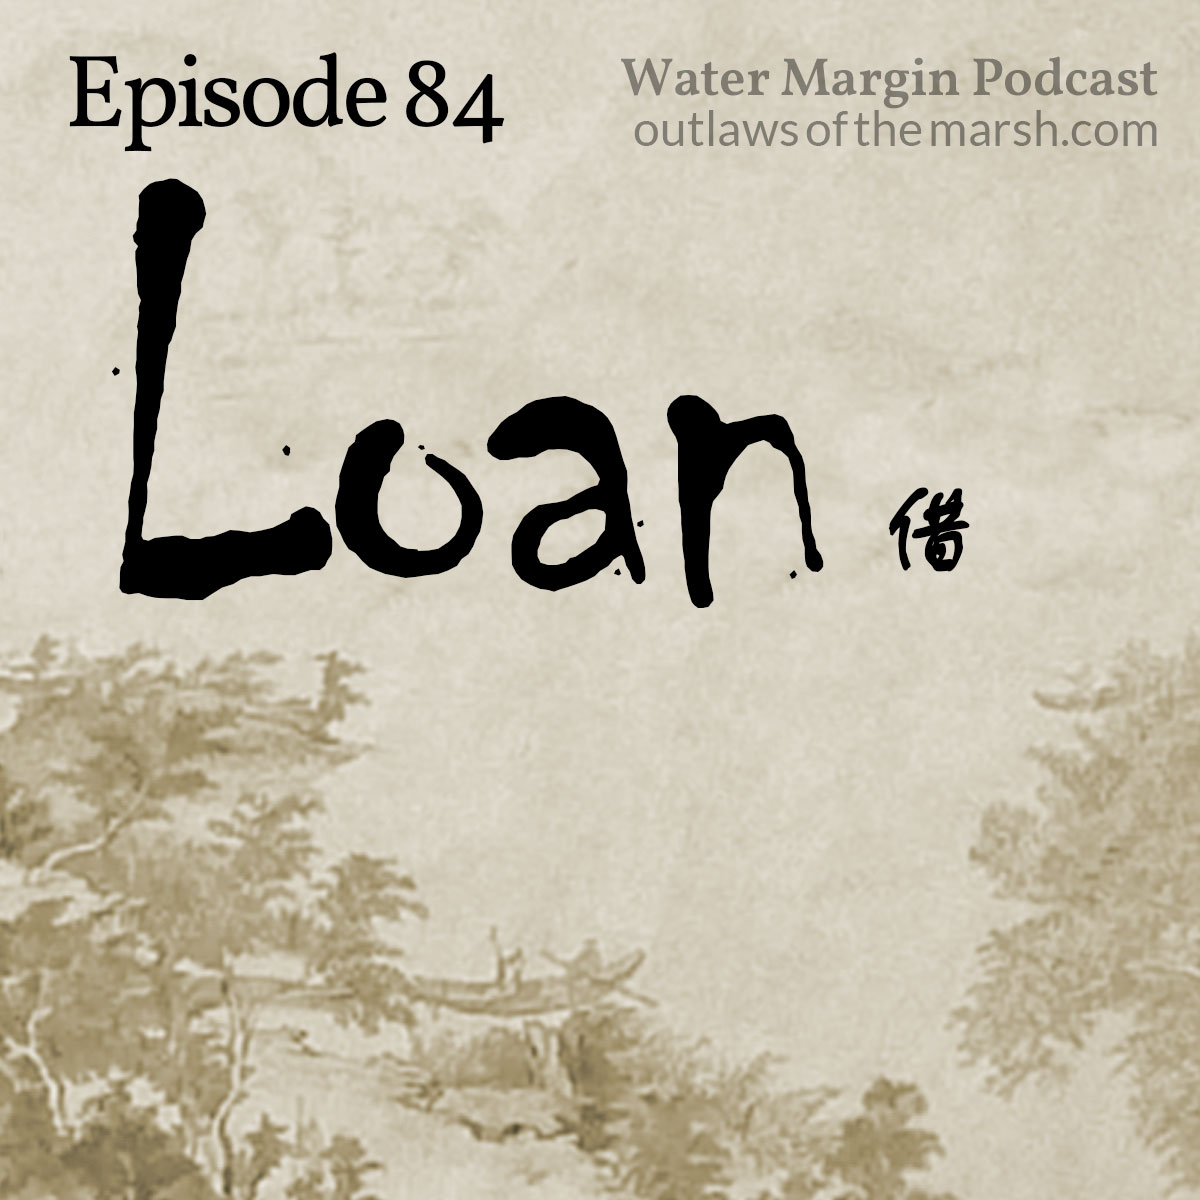 Water Margin Podcast: Episode 084